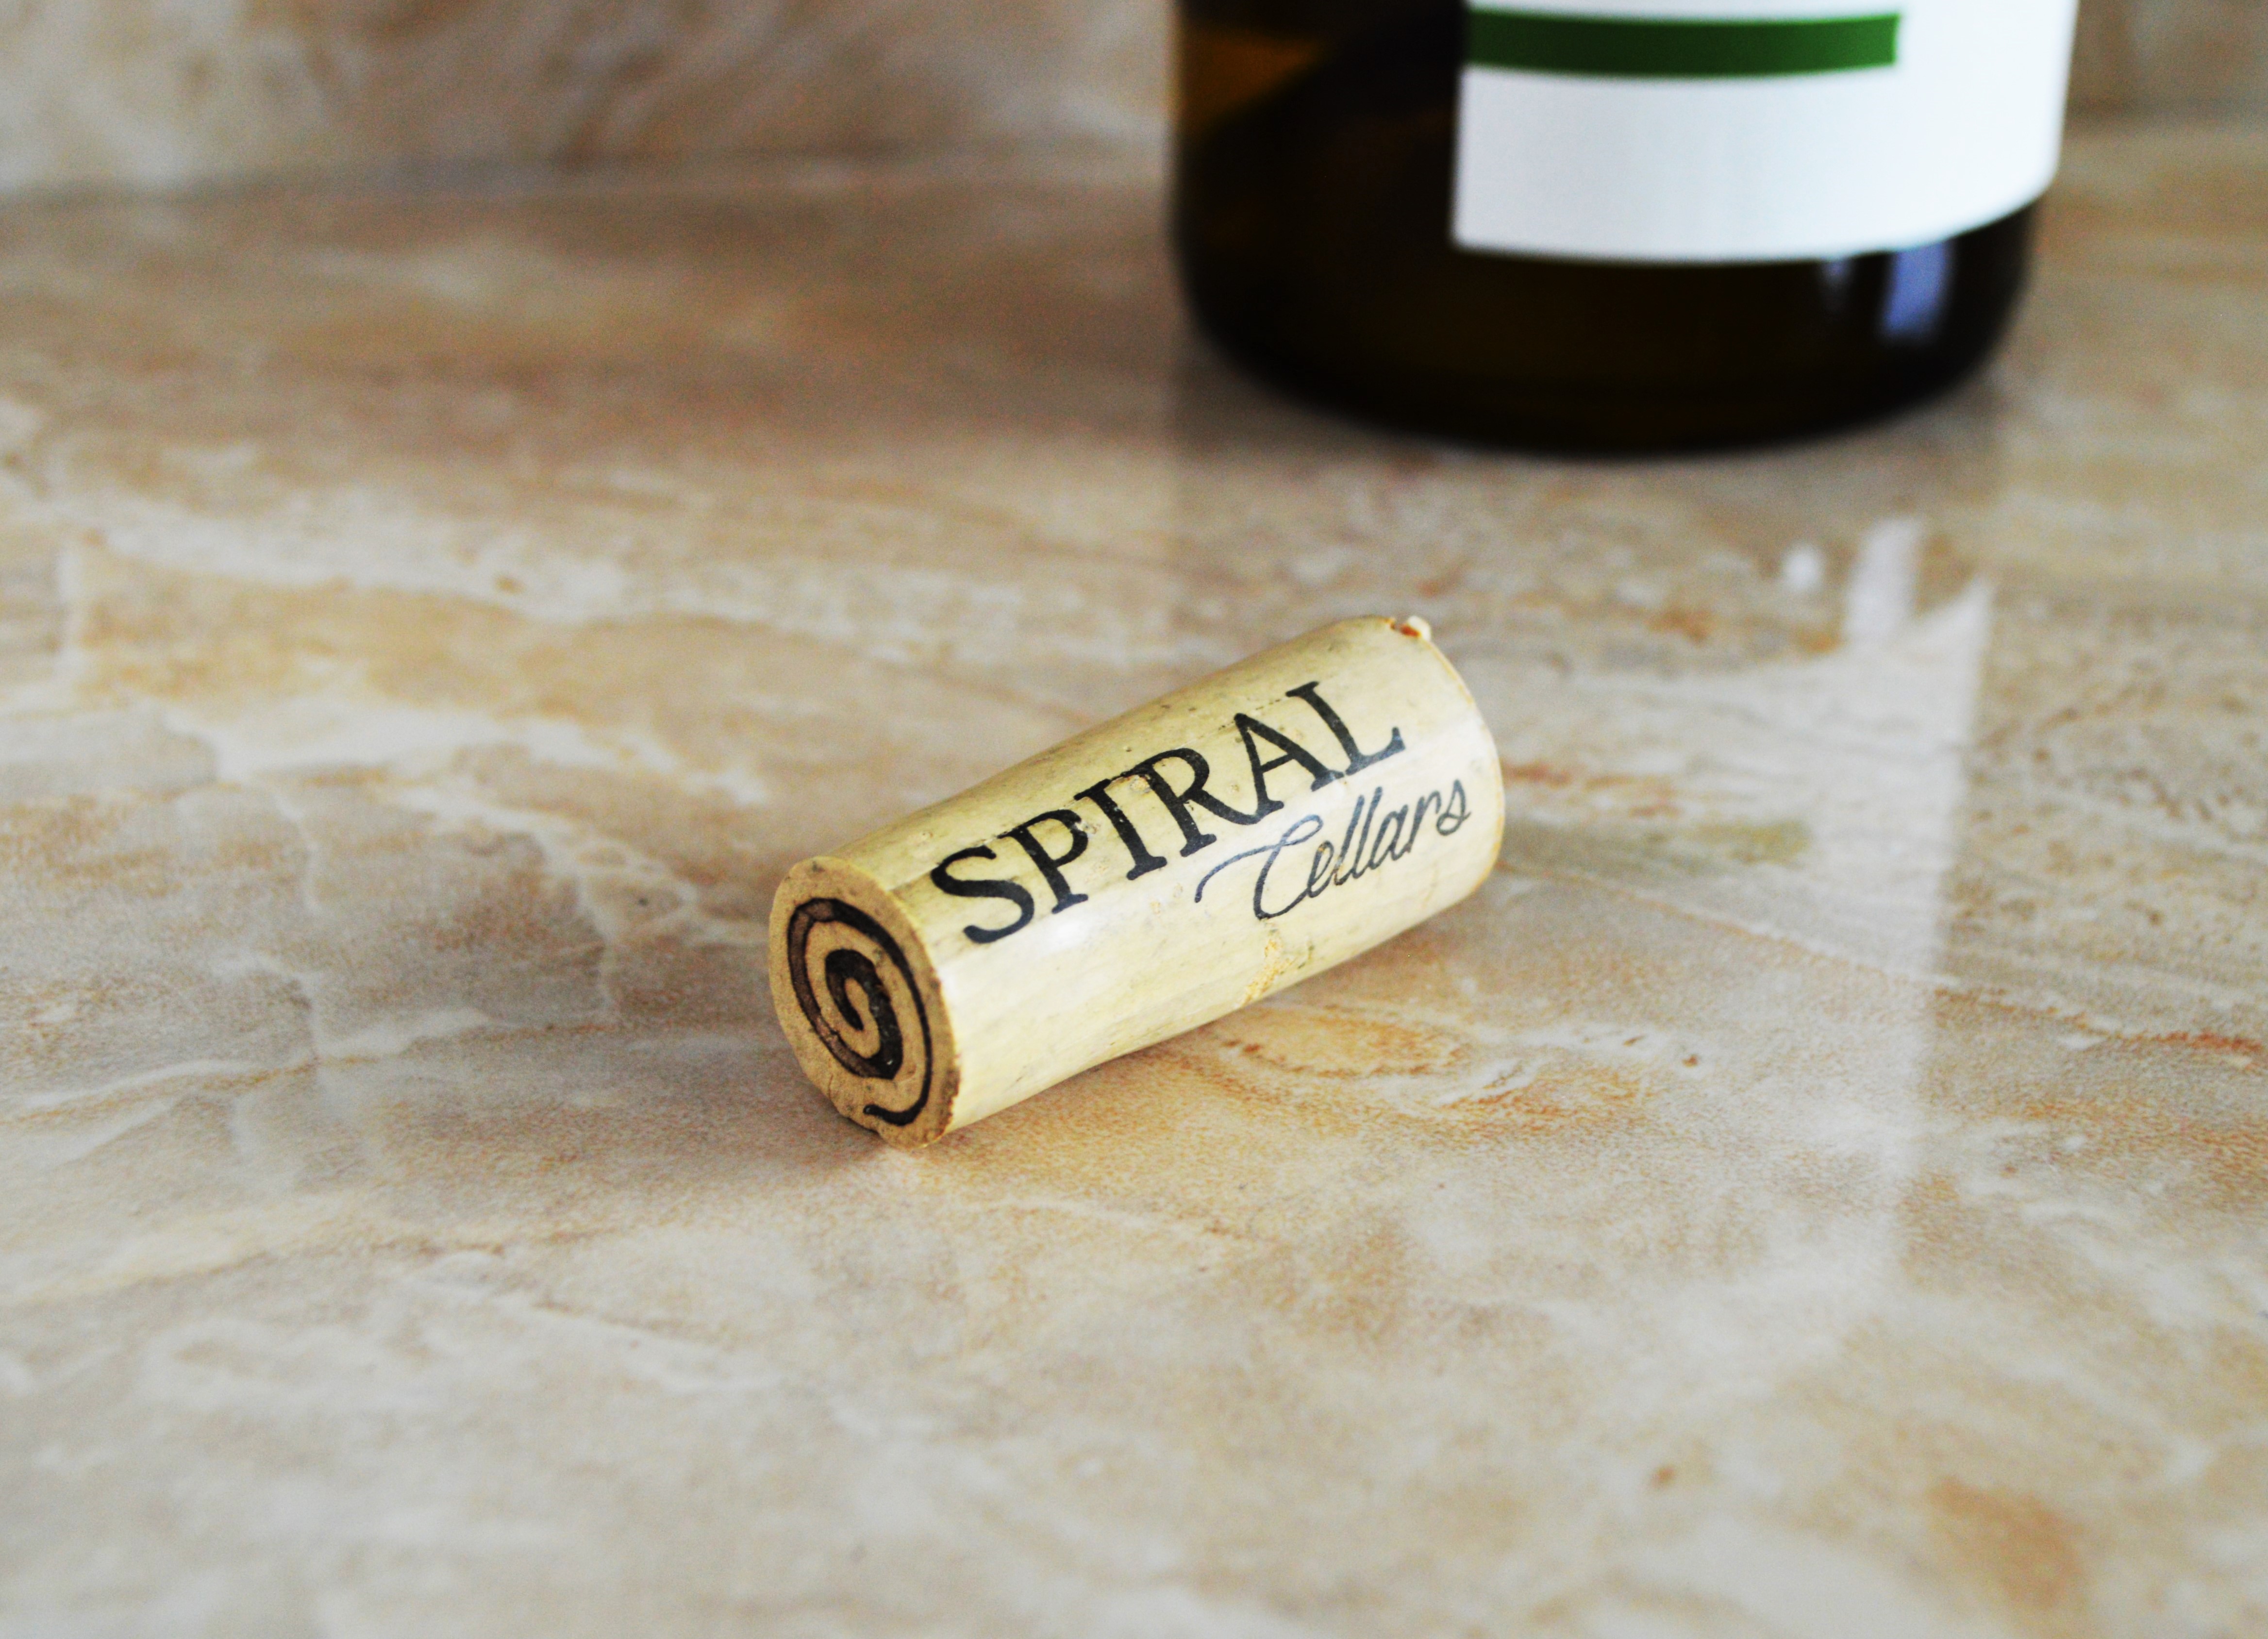 Spiral Cellars Napa Valley Chardonnay 2012